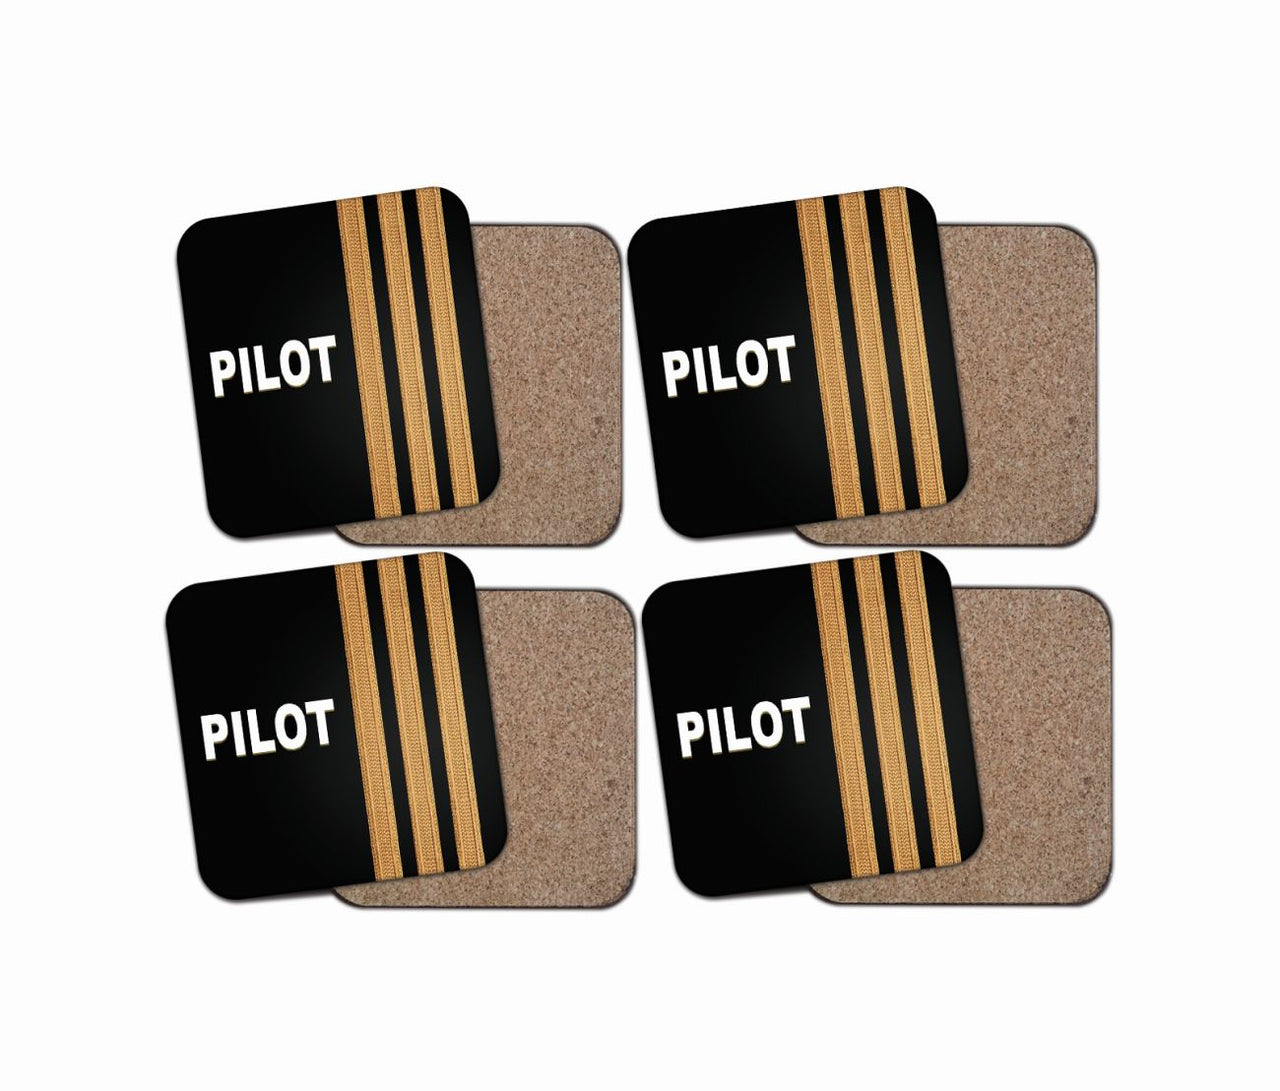 PILOT & Epaulettes 3 Lines Designed Coasters